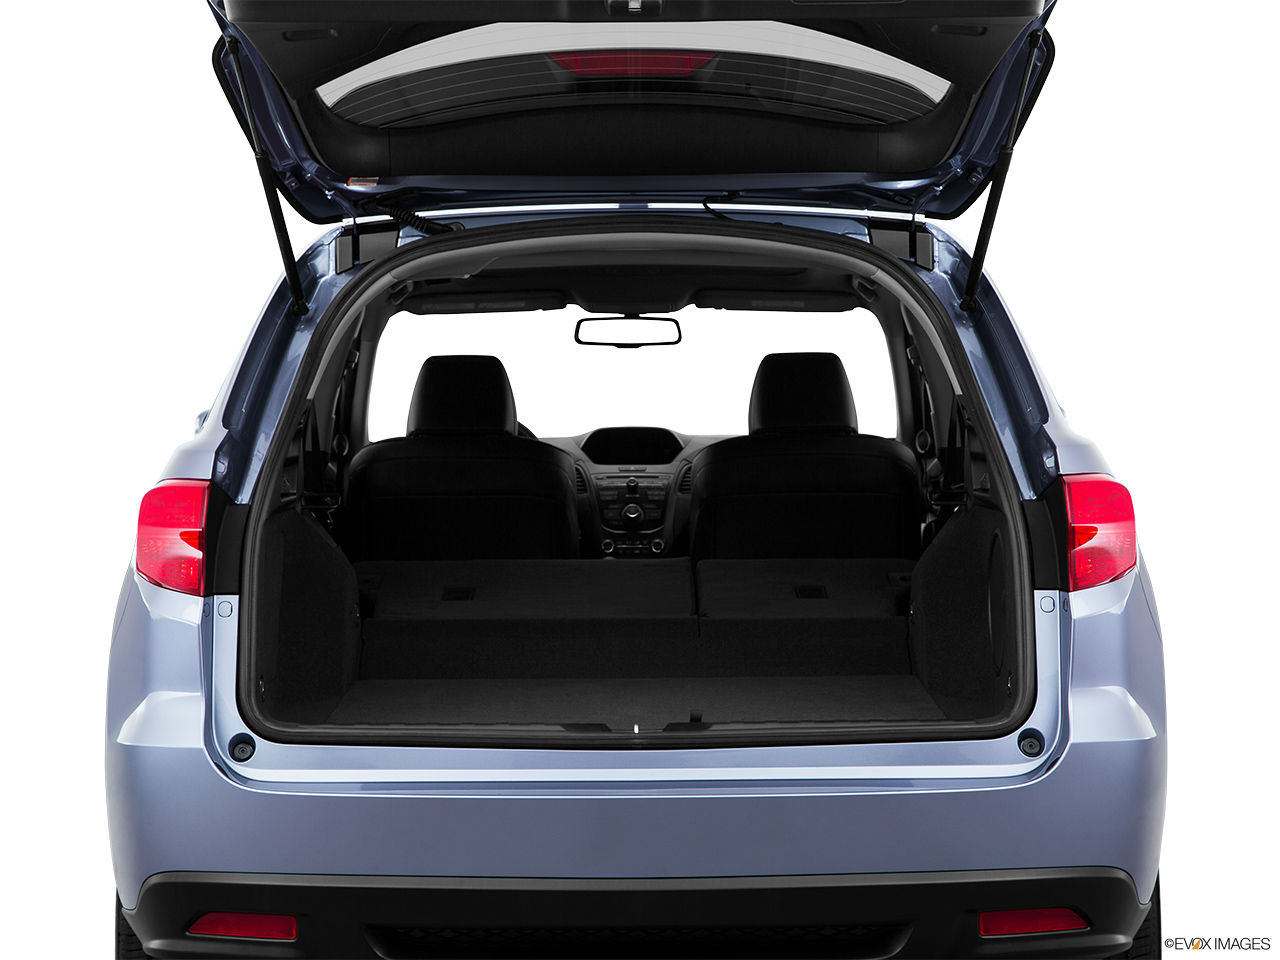 2015 Acura RDX AWD Hatchback & SUV rear angle. 